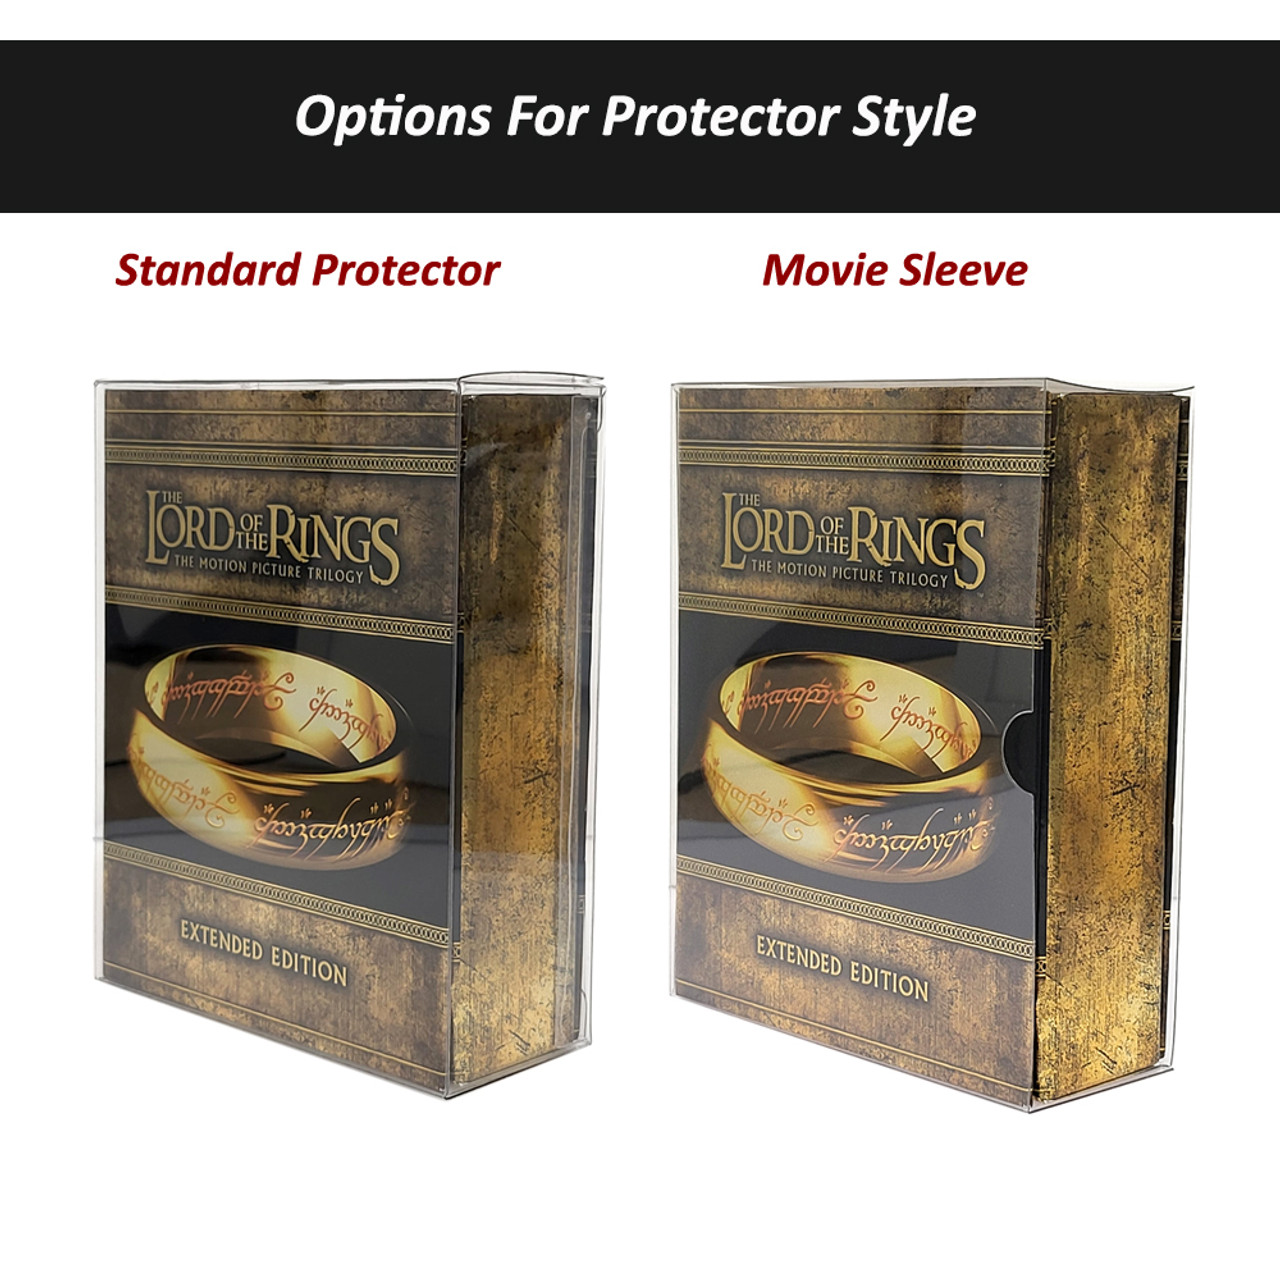 Protector For Nova Media - 1917 One Click Box